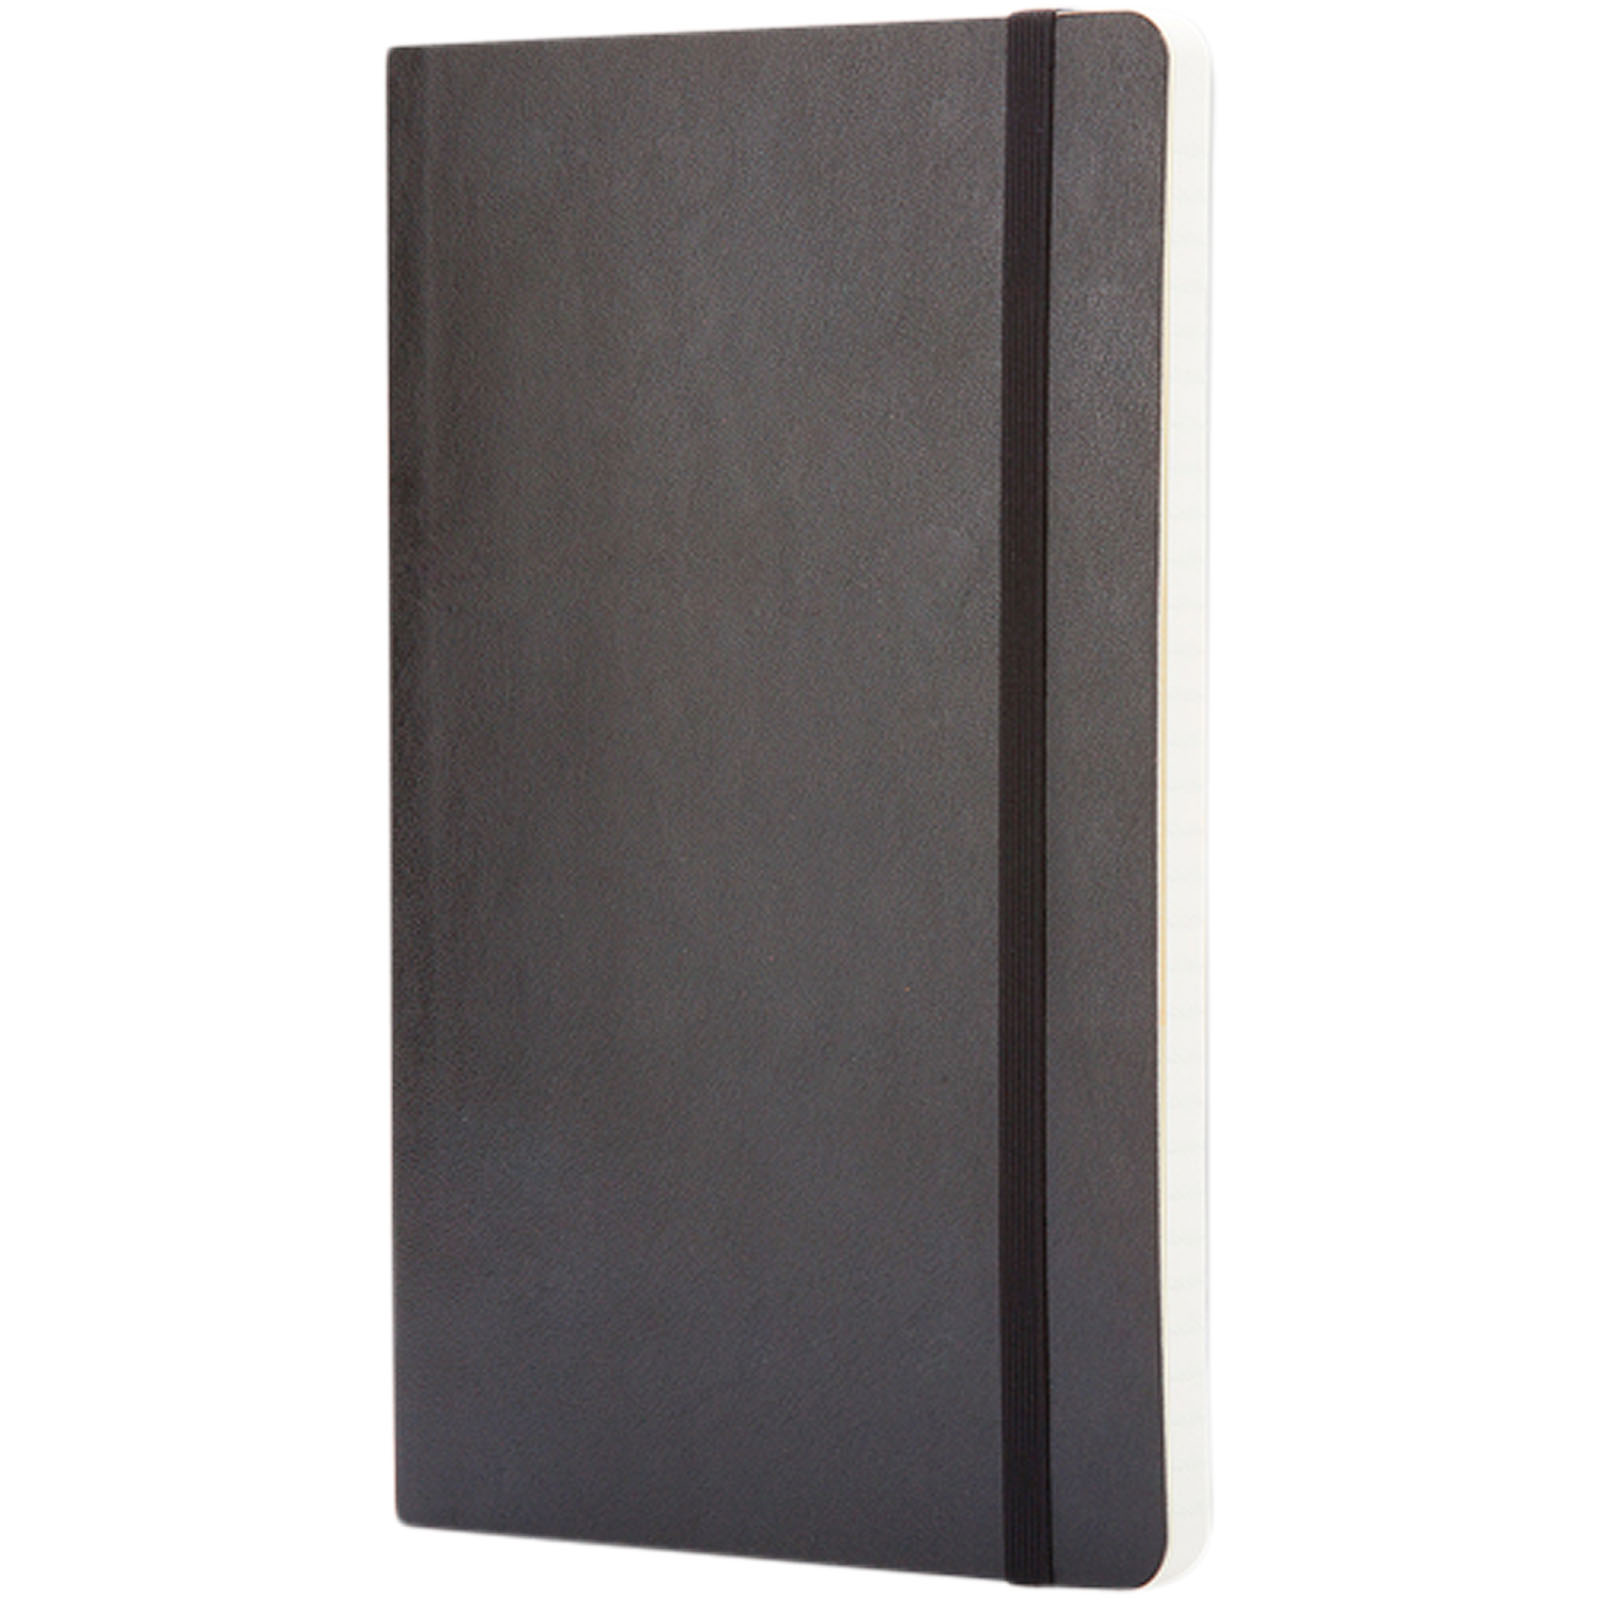 Moleskine Classic Large Soft Cover Notebook - Fritham